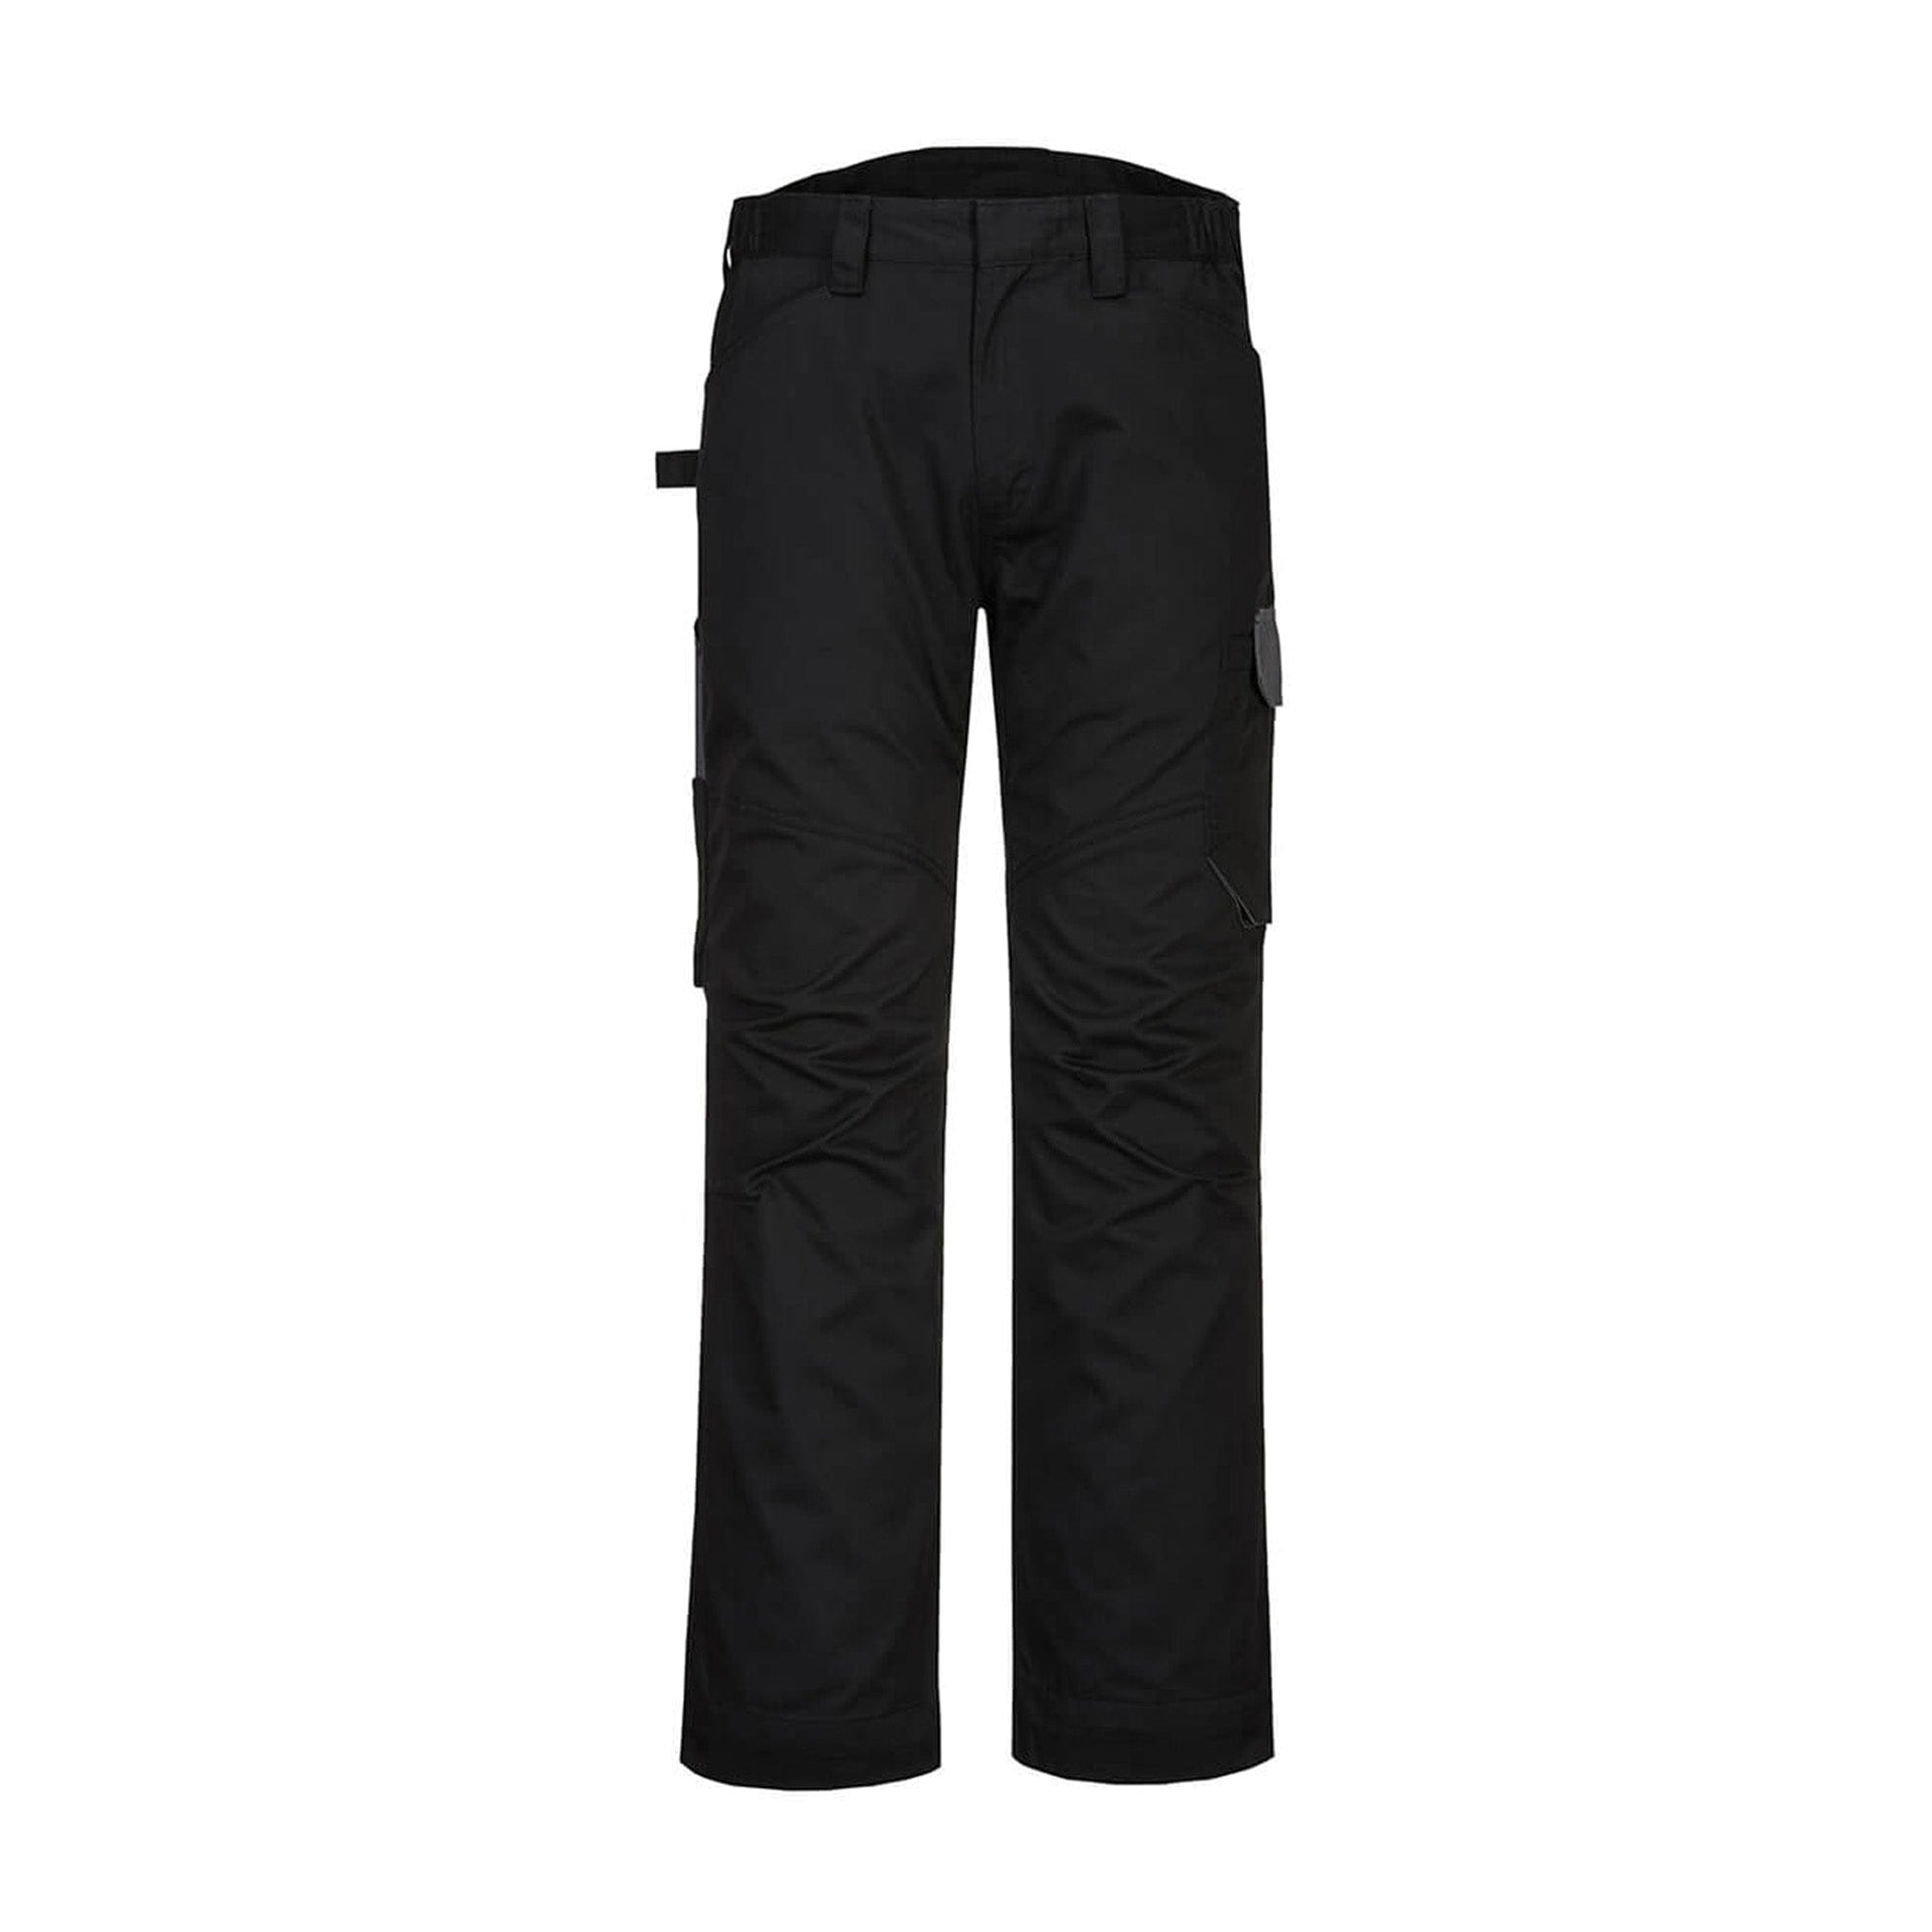 Portwest PW2 Service Trousers PW240 Black/Zoom Grey